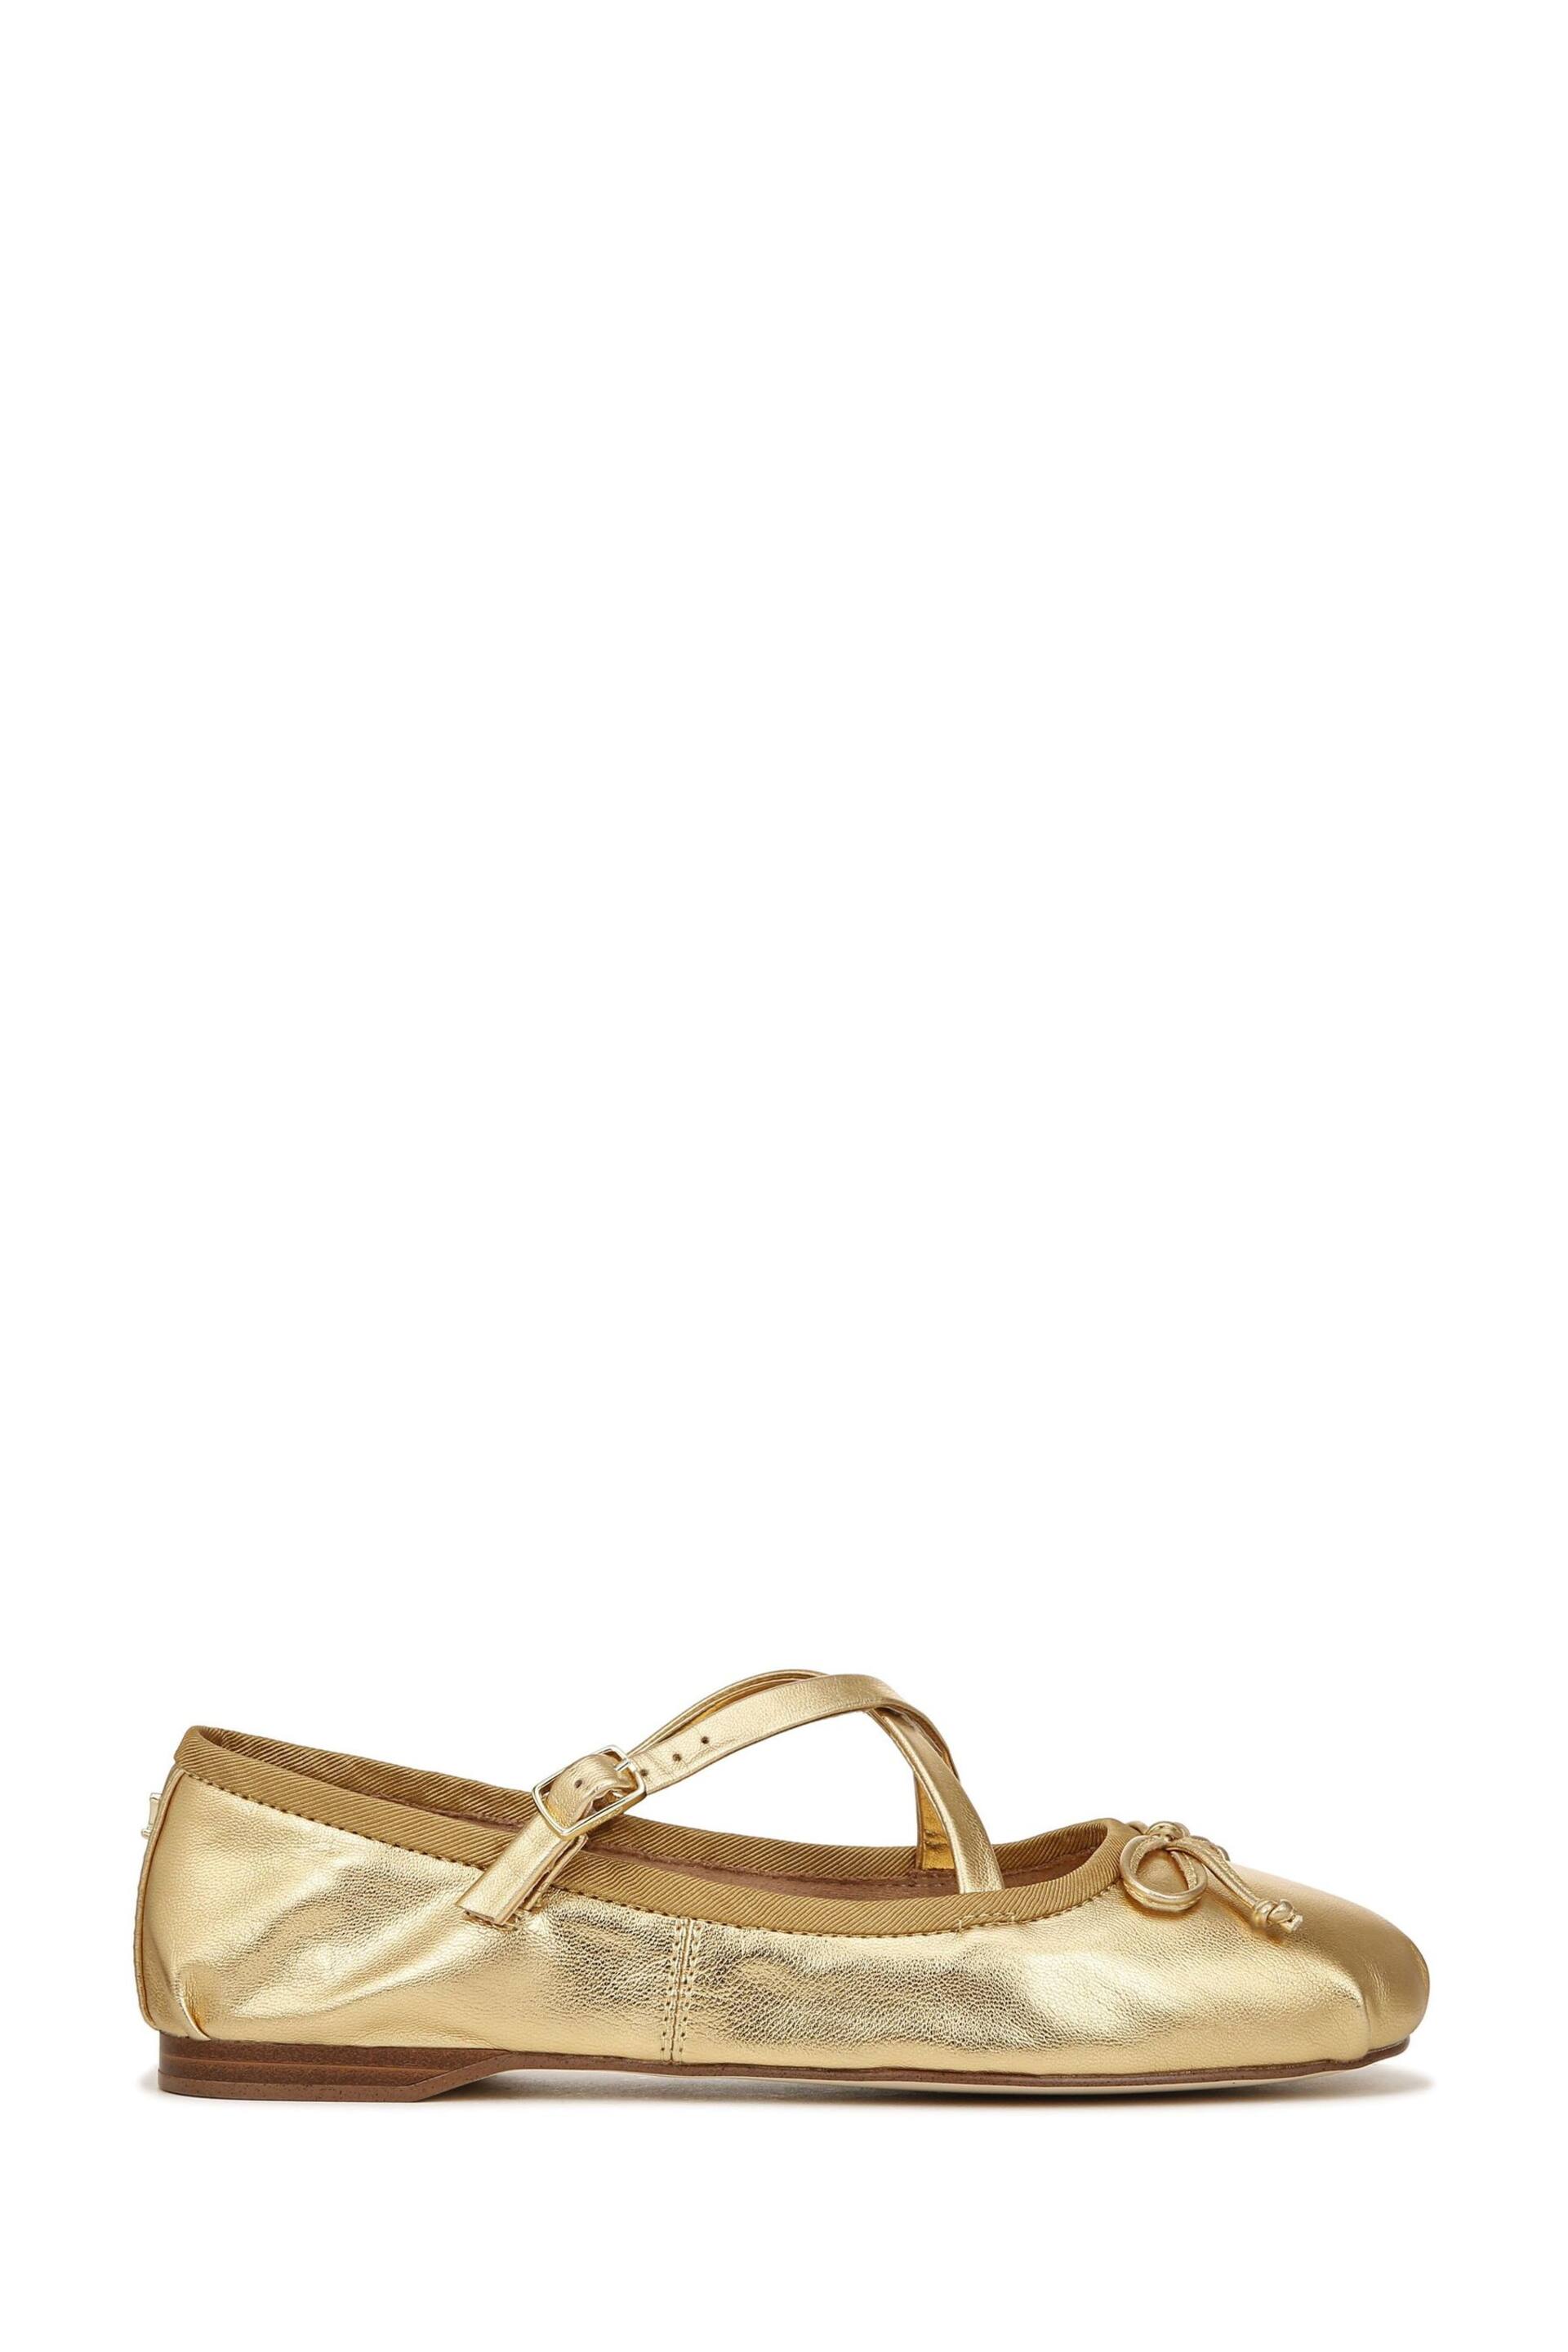 Circus NY Gold Zuri Ballerina Shoes - Image 1 of 7